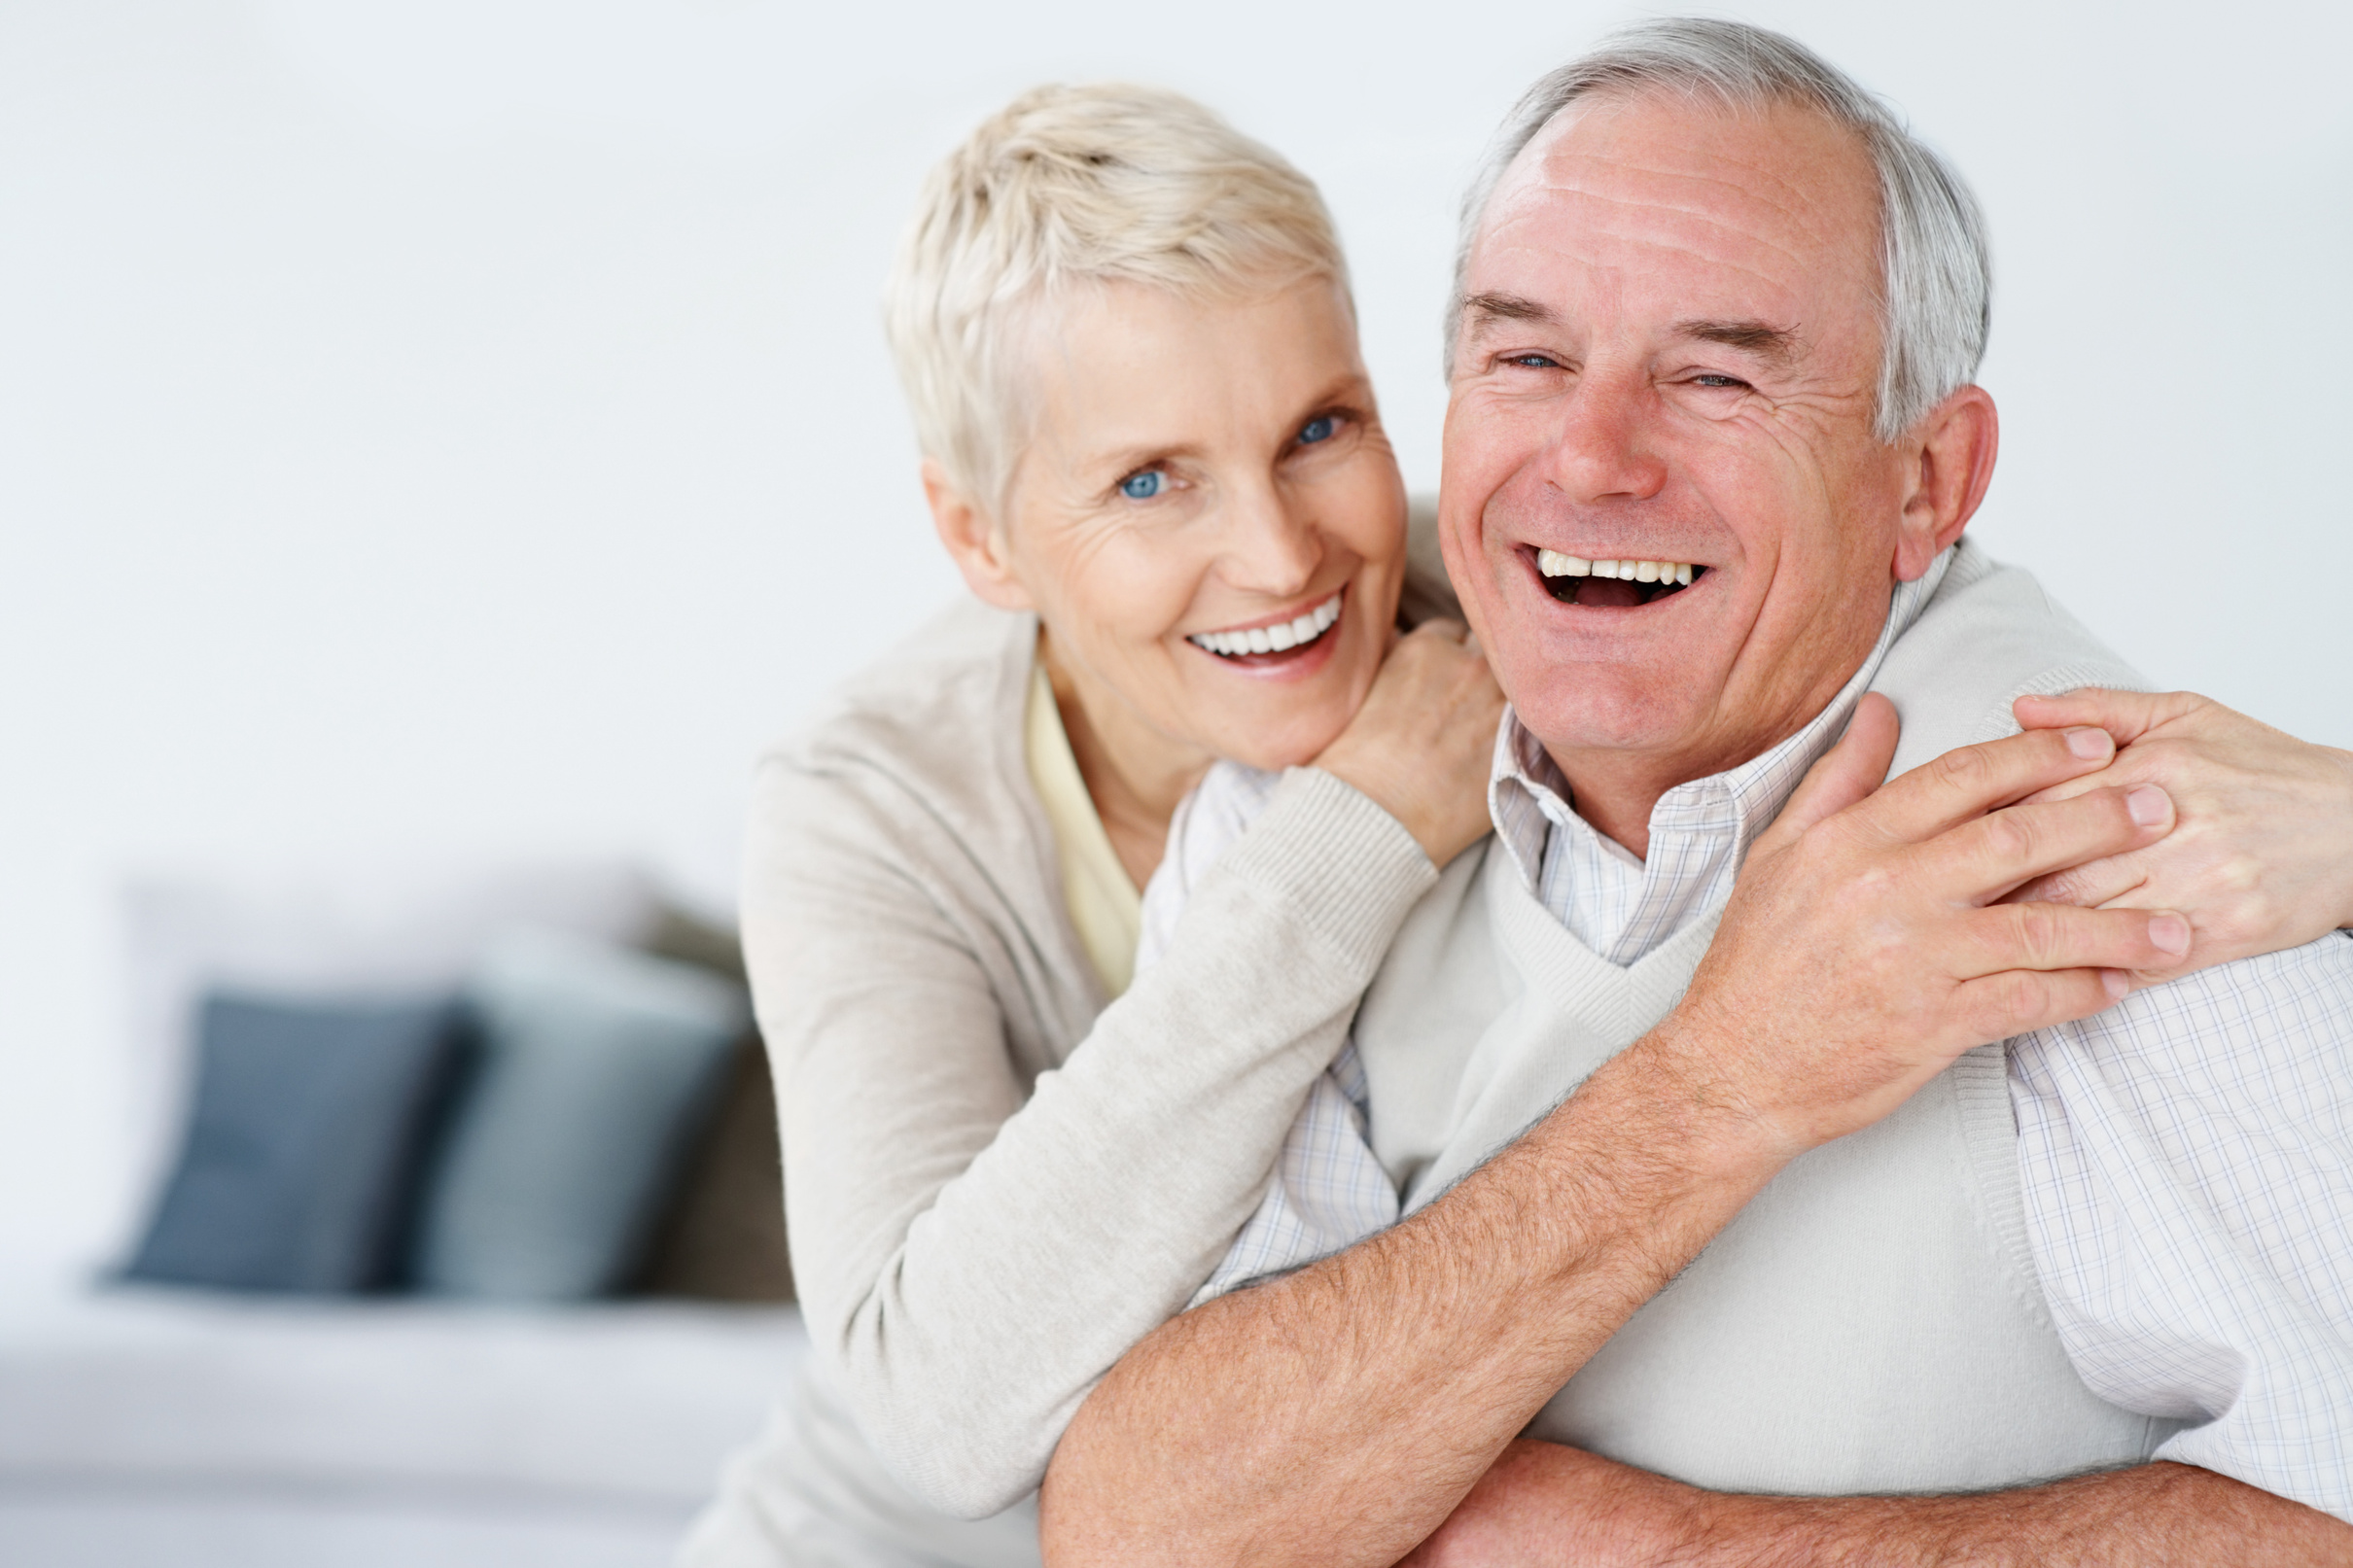 Retired elderly couple smiling together